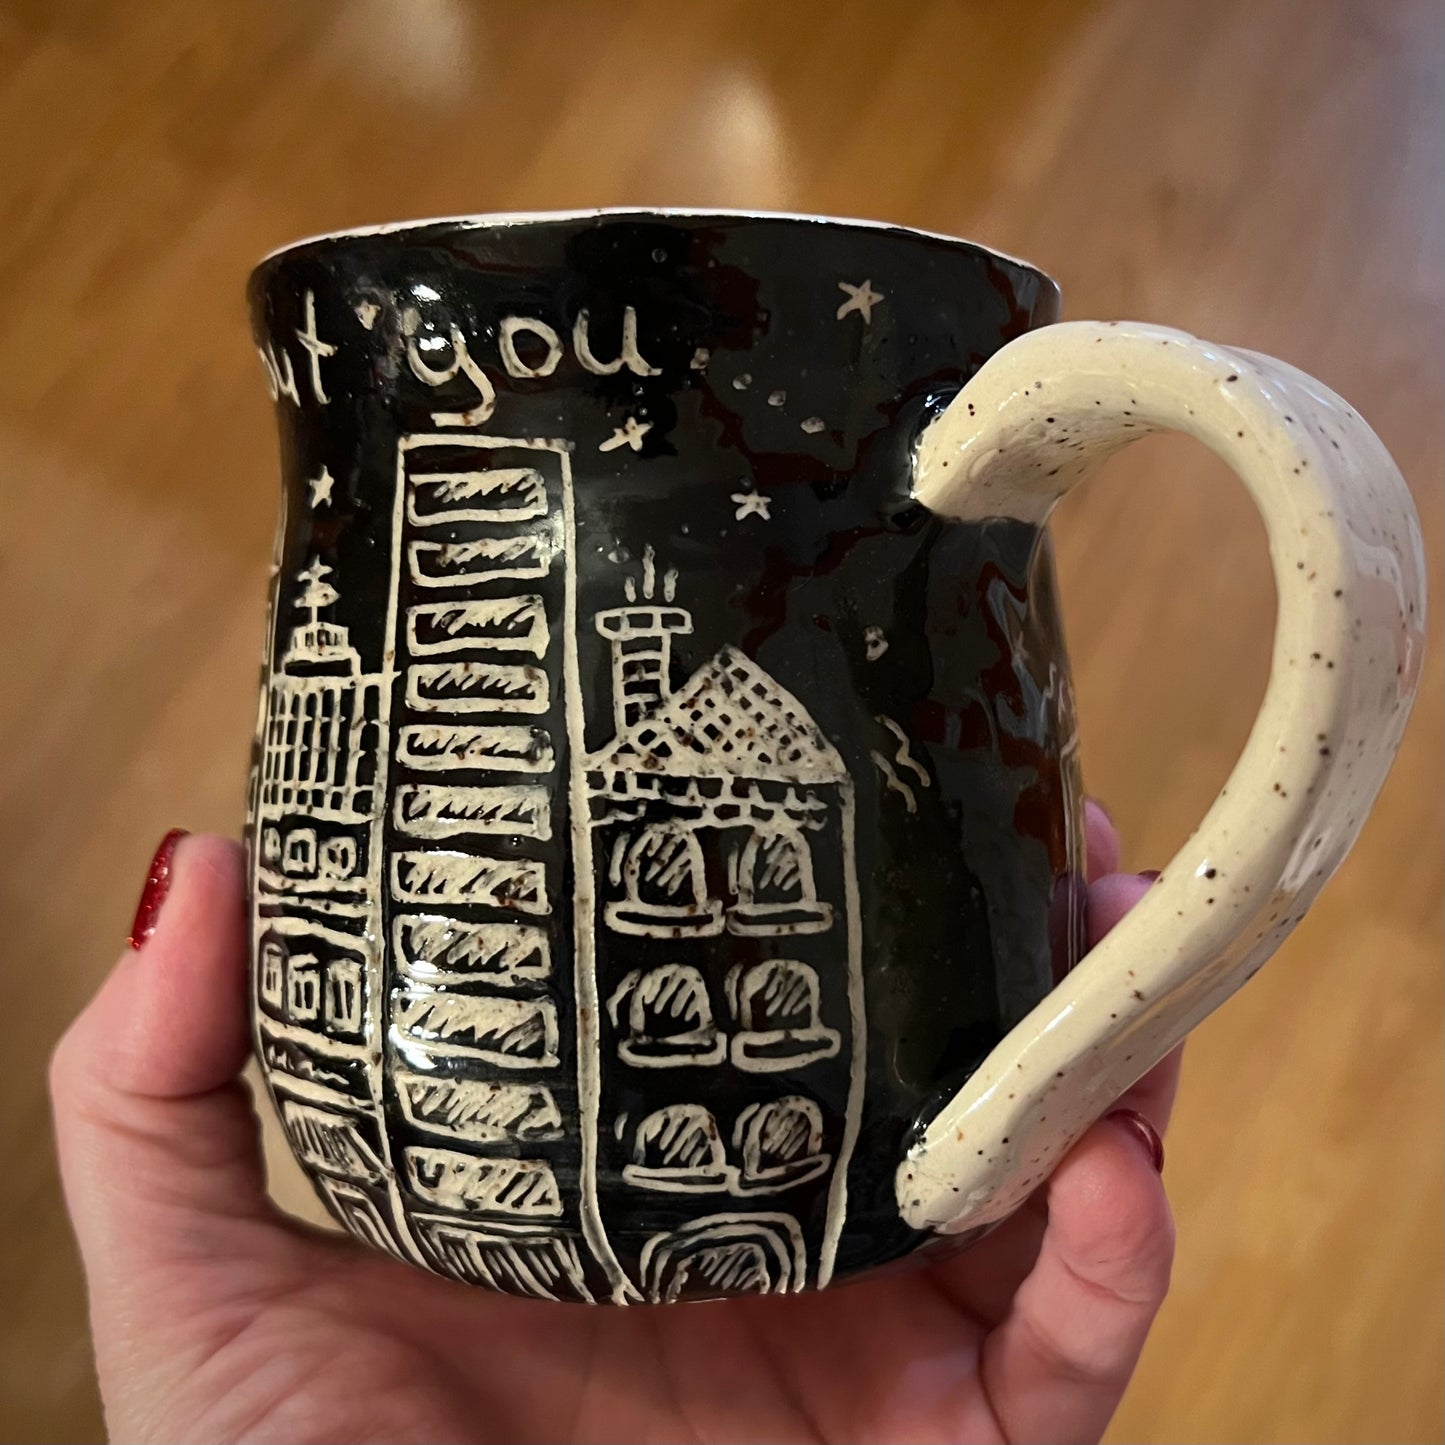 I told the Stars About You Ceramic Mug